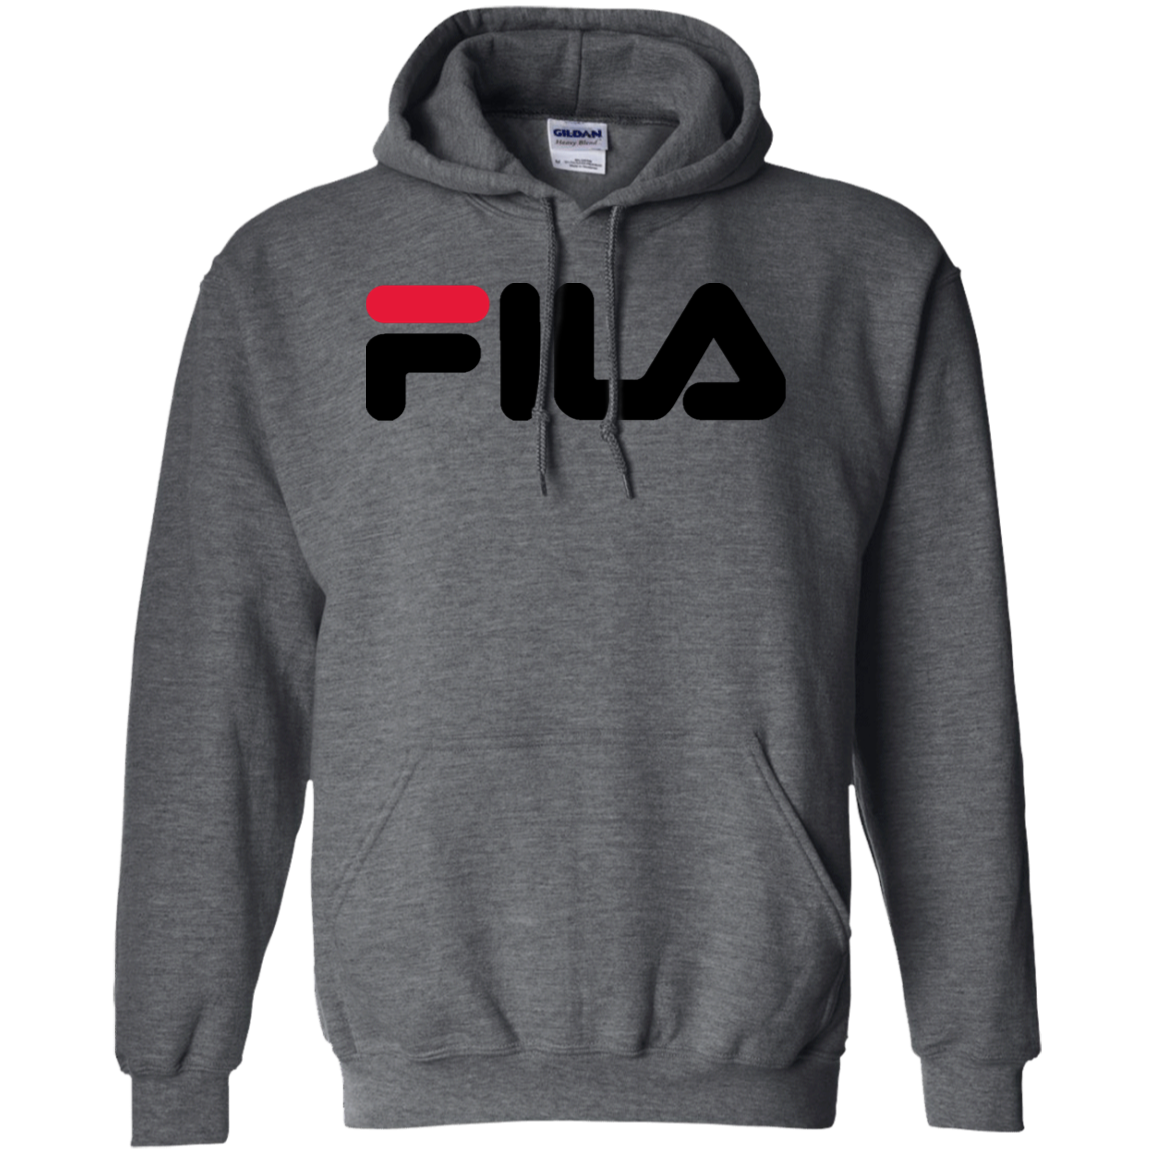 fila hoodie gray